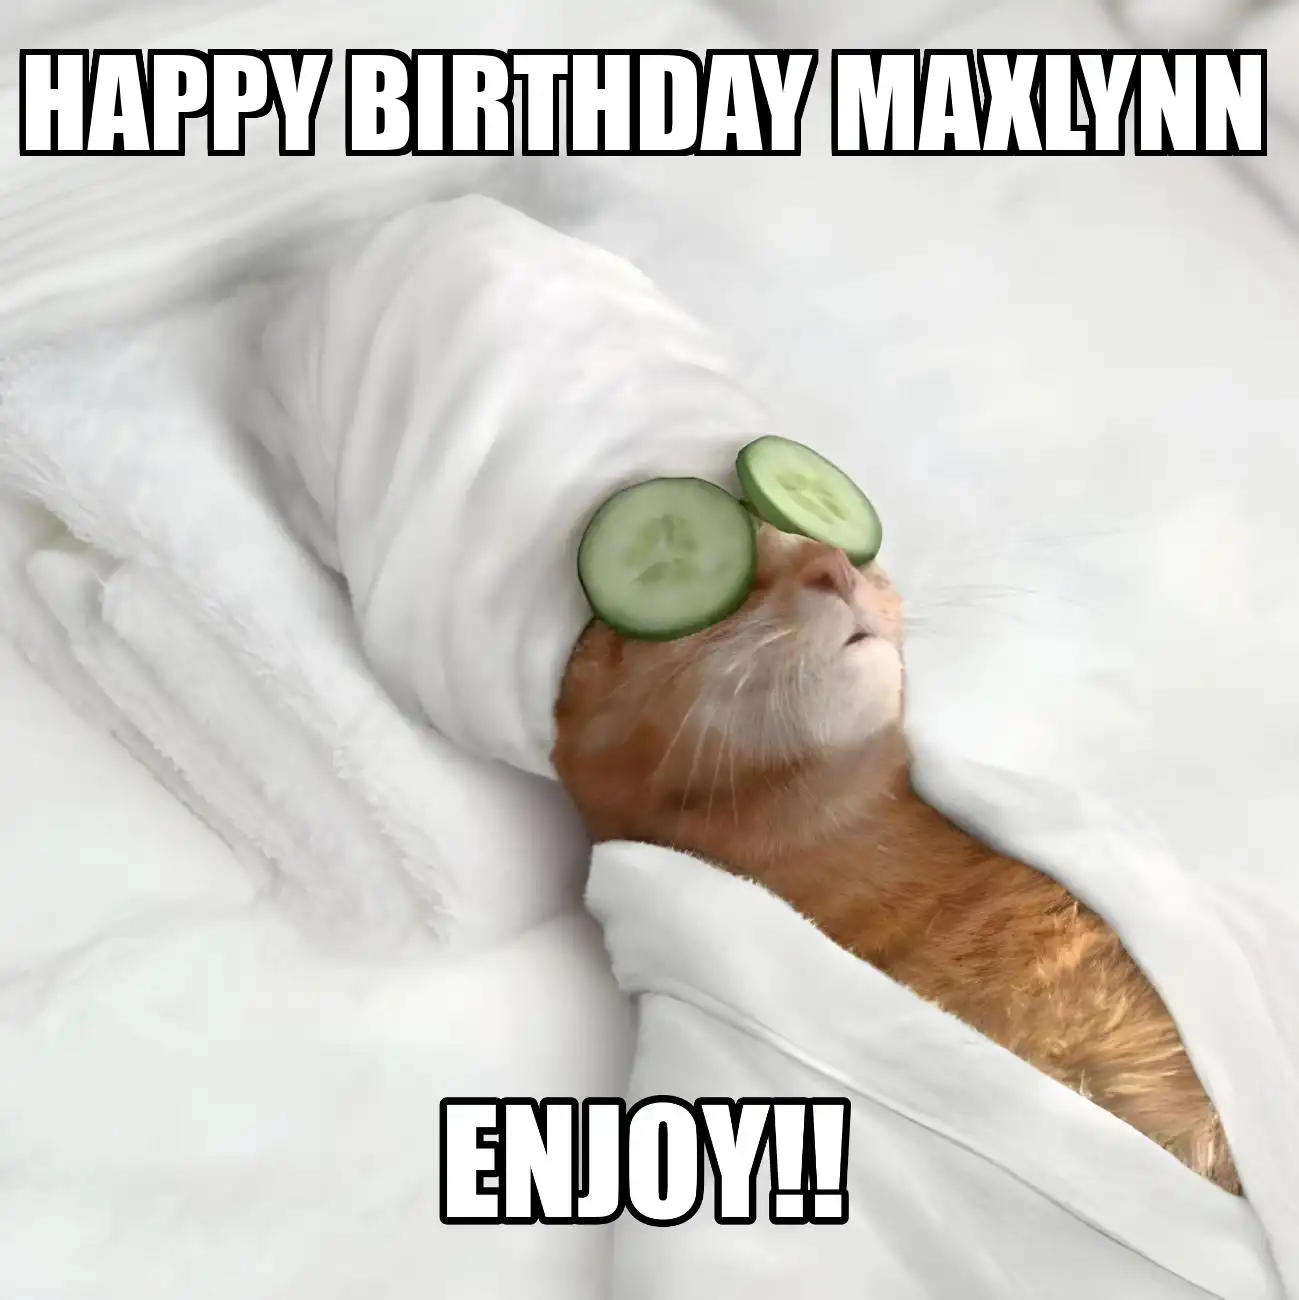 Happy Birthday Maxlynn Enjoy Cat Meme